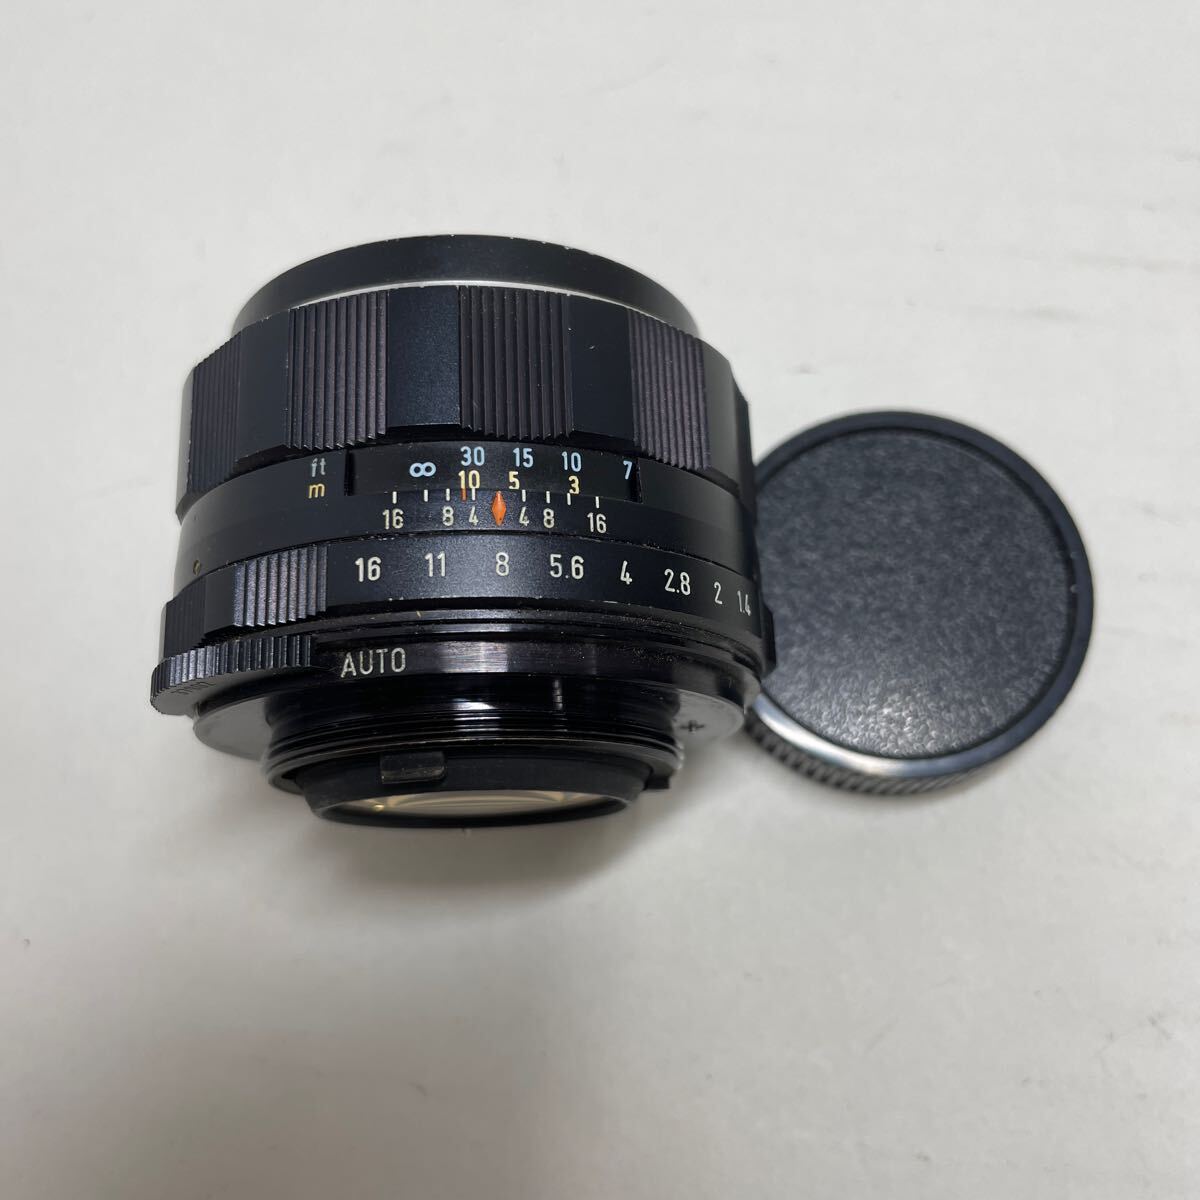  Junk / returned goods un- possible lens ASAHI Super-Multi-Coated TAKUMAR 50mm F1.4 #i53157 j8